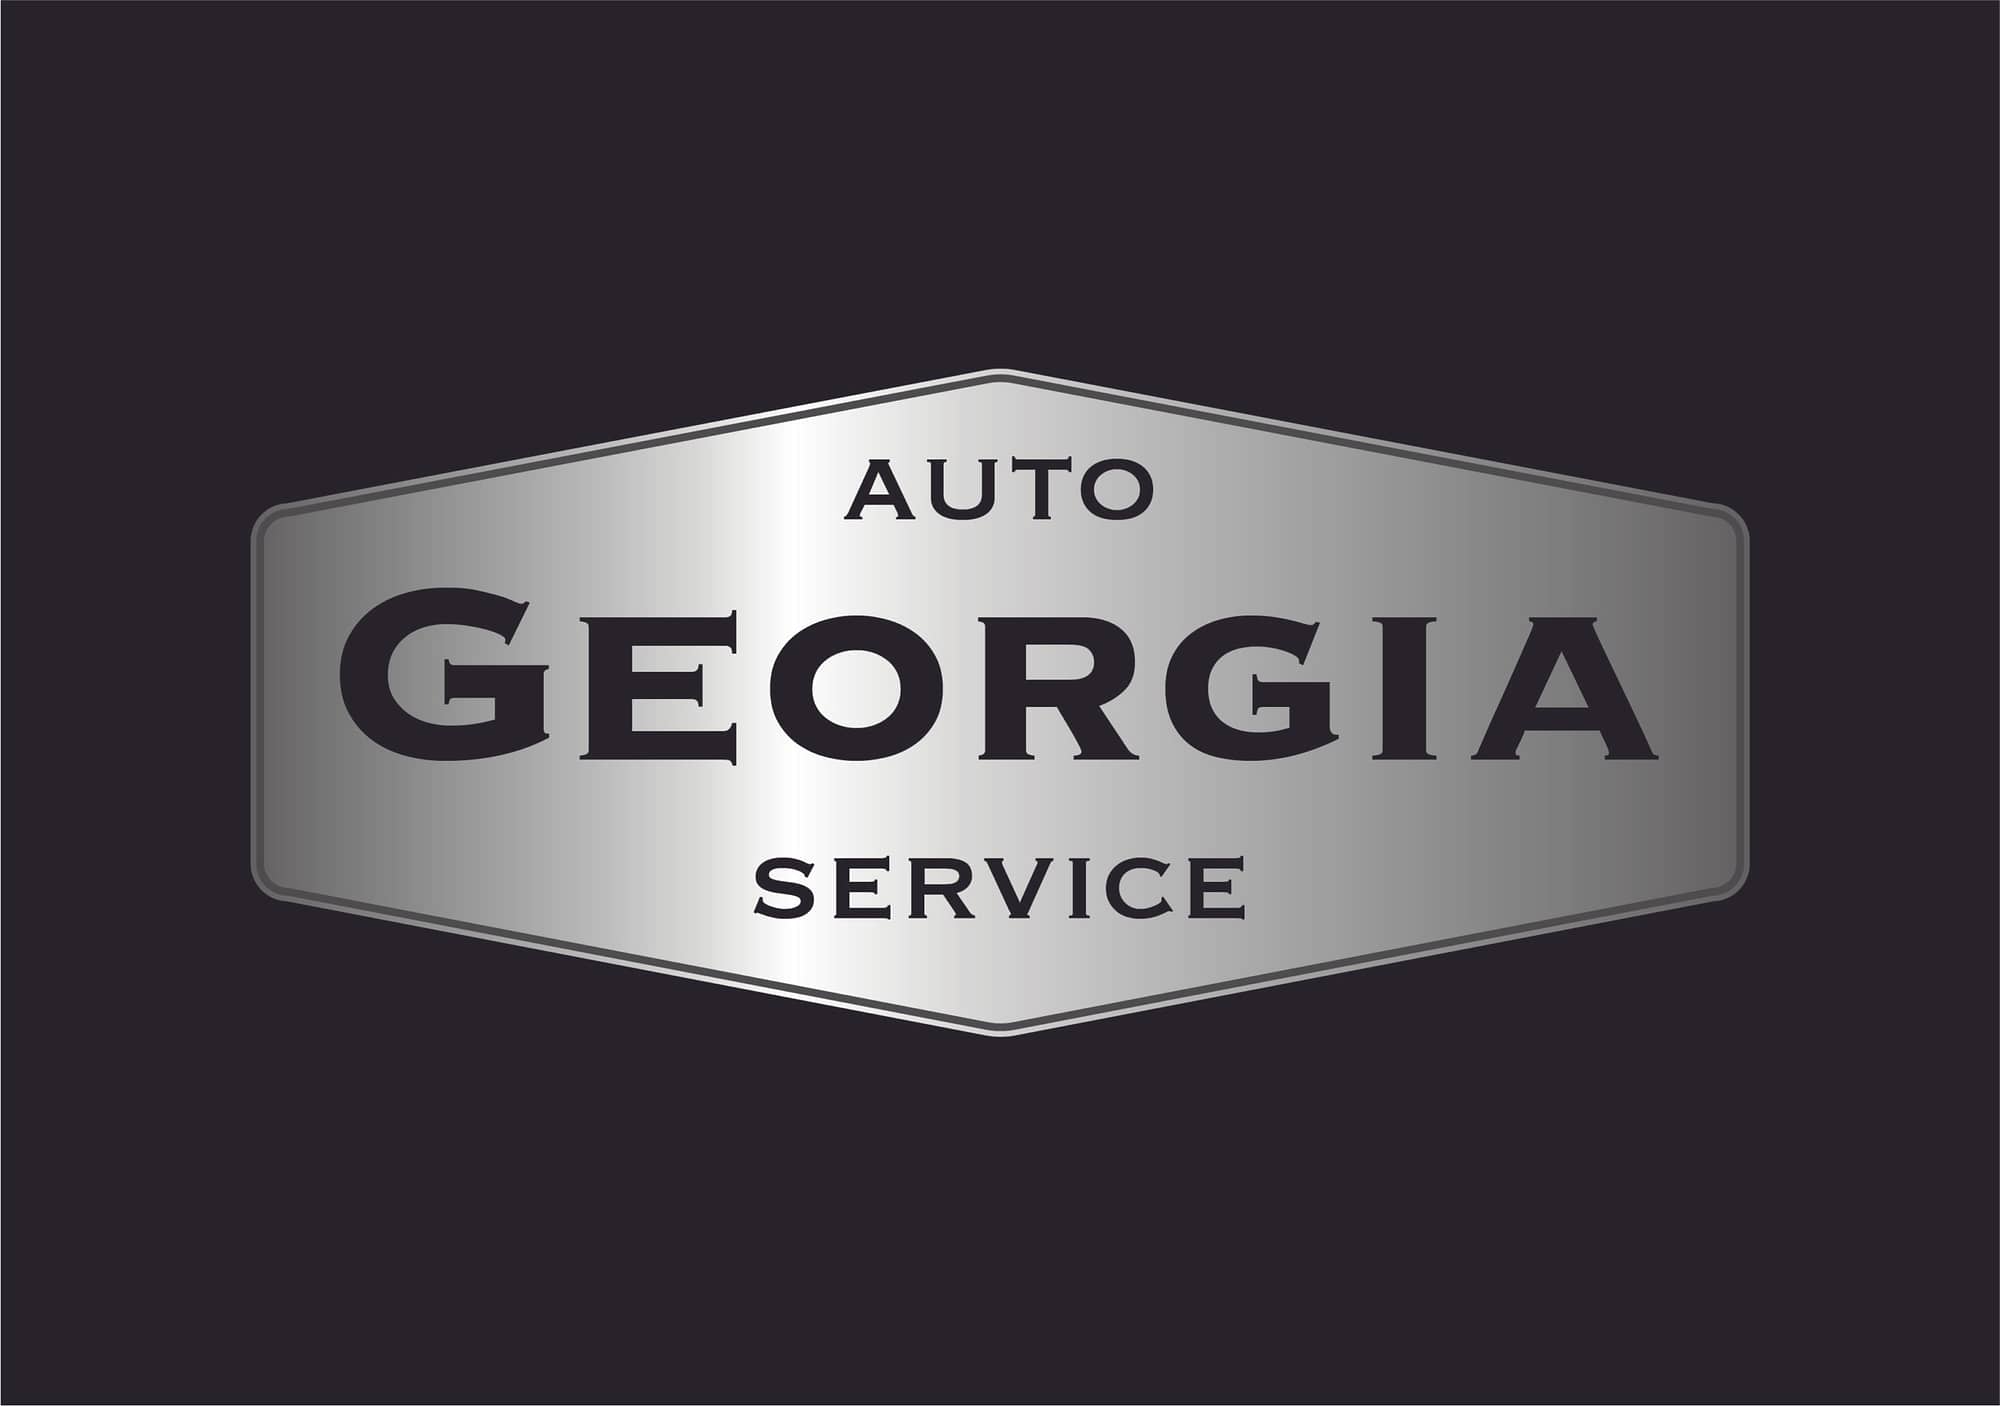 Georgia Auto Service, LLC